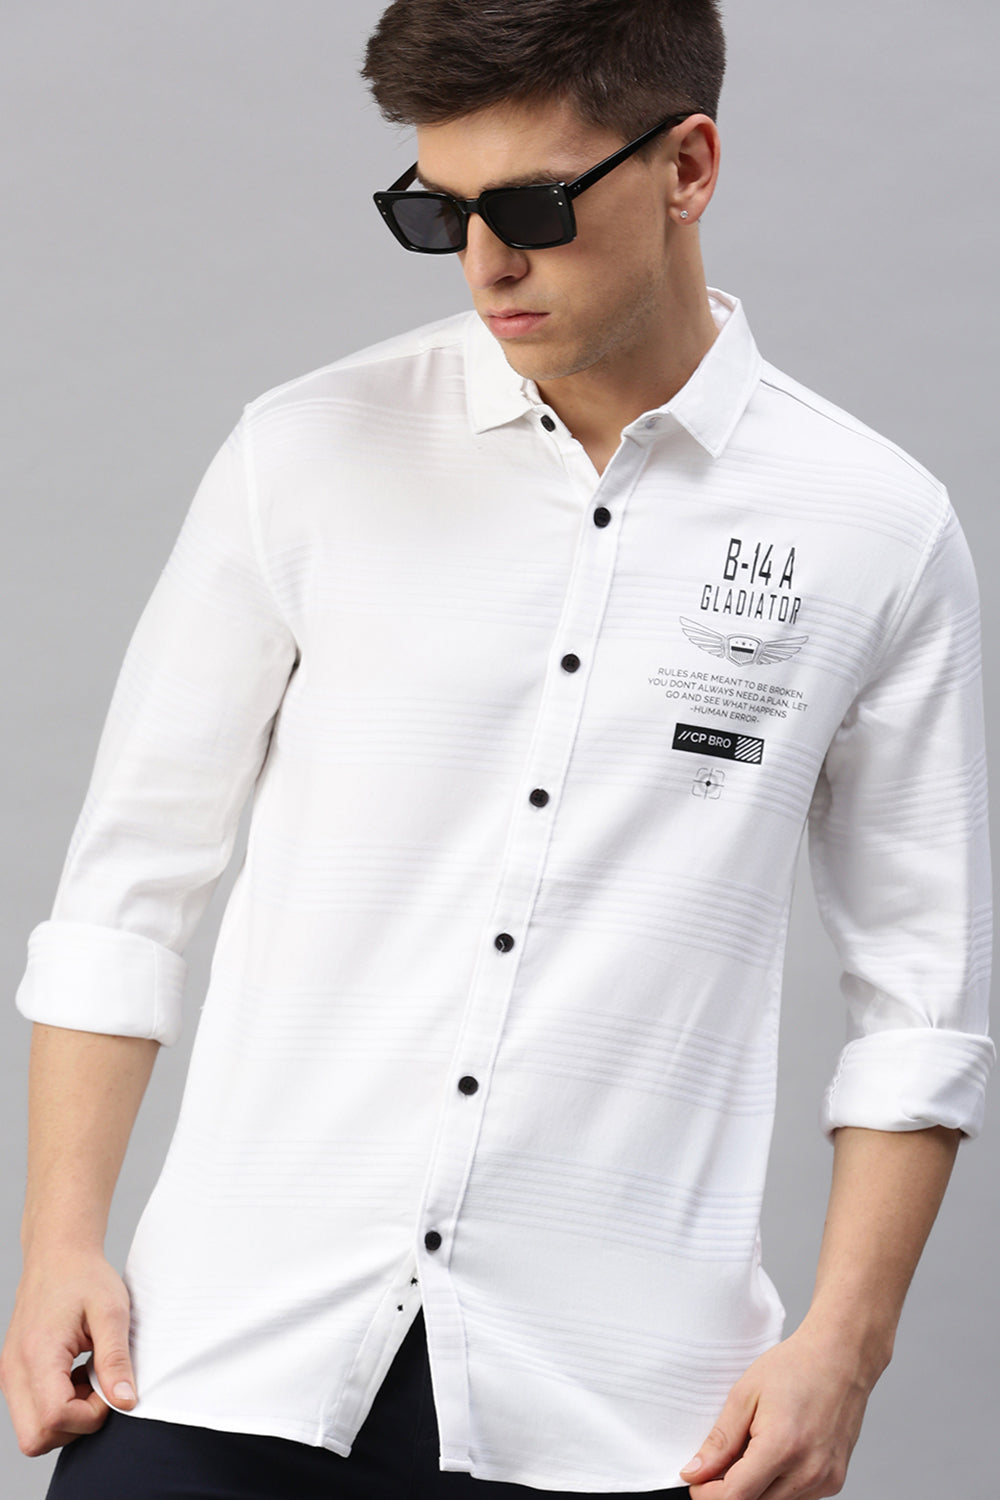 CP BRO Men's Cotton Full Sleeve Striped Slim Fit Polo Neck White Color Woven Shirt | Sbo1-13 A